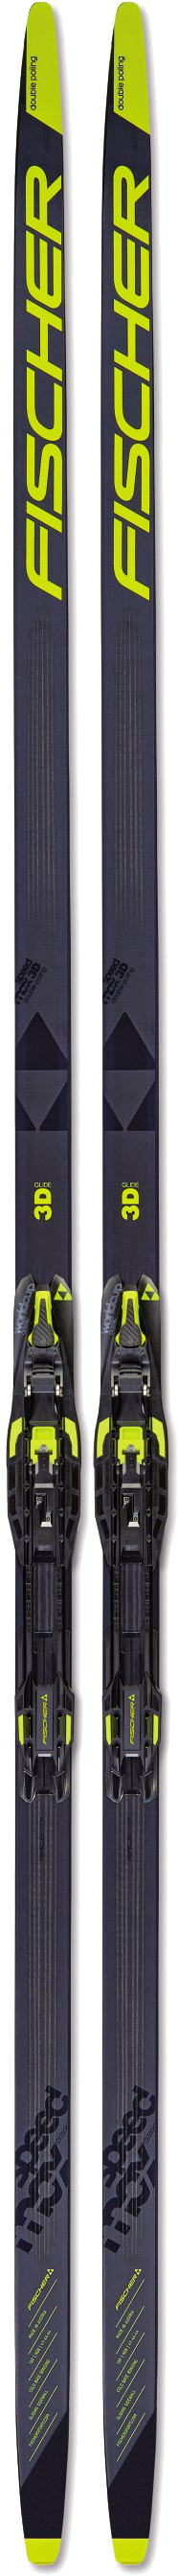 Прогулочные лыжи Fischer Speedmax 3D Double Polling IFP 197 см